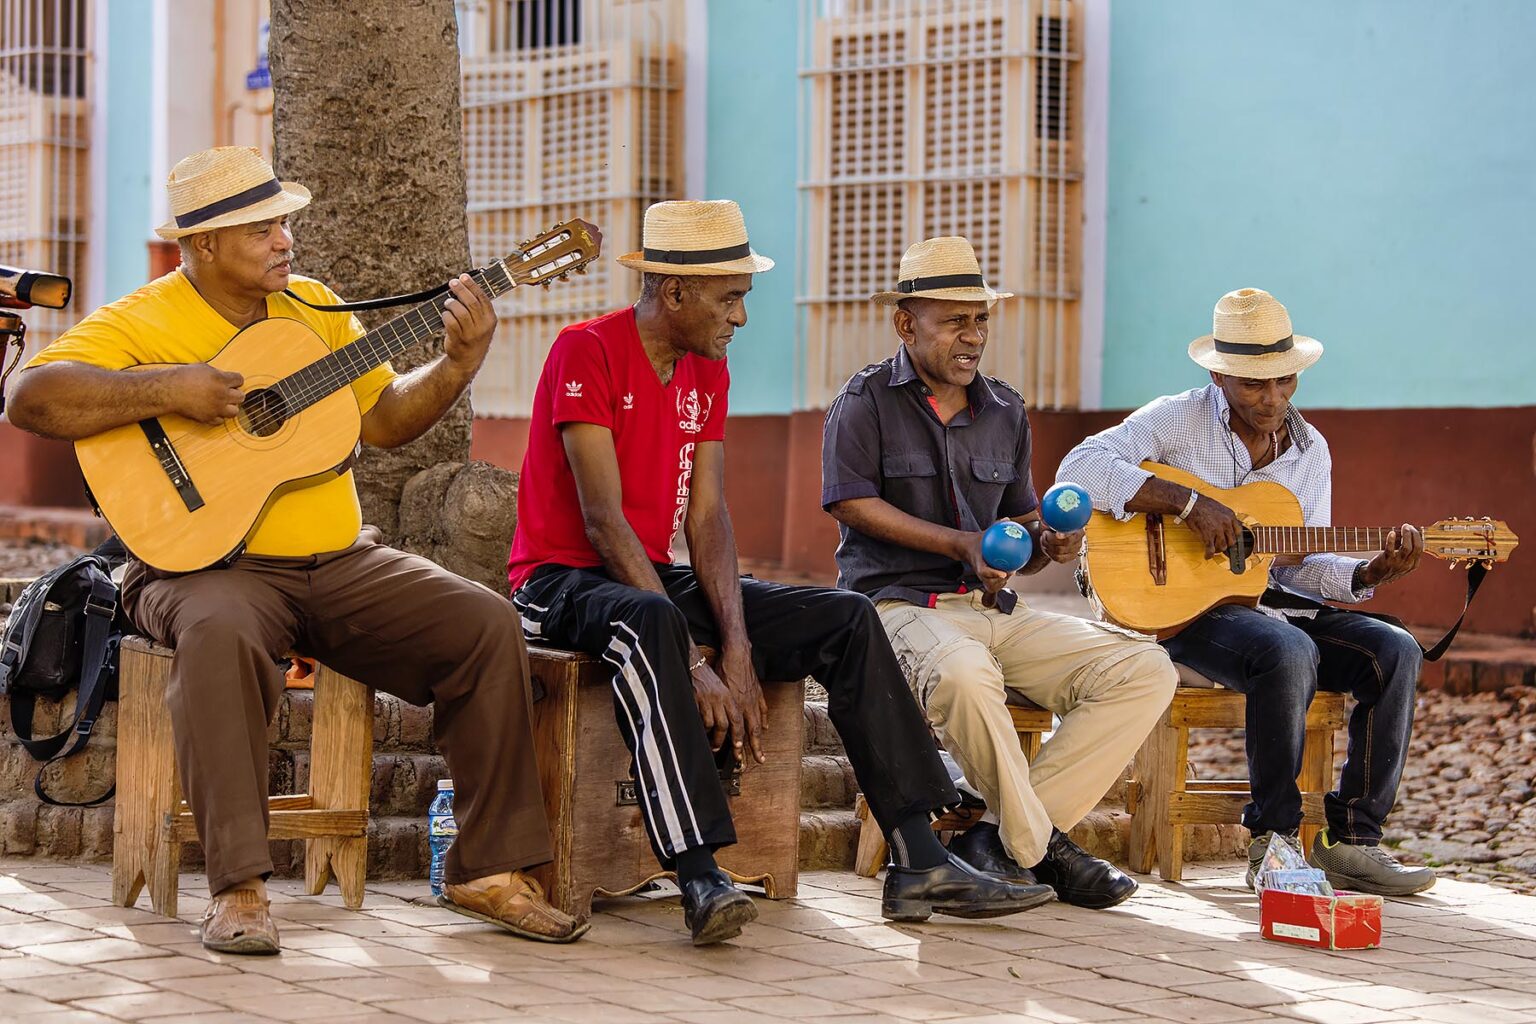 A CUBAN band plays traditional music in a courtyard - TRINIDAD, CUBA